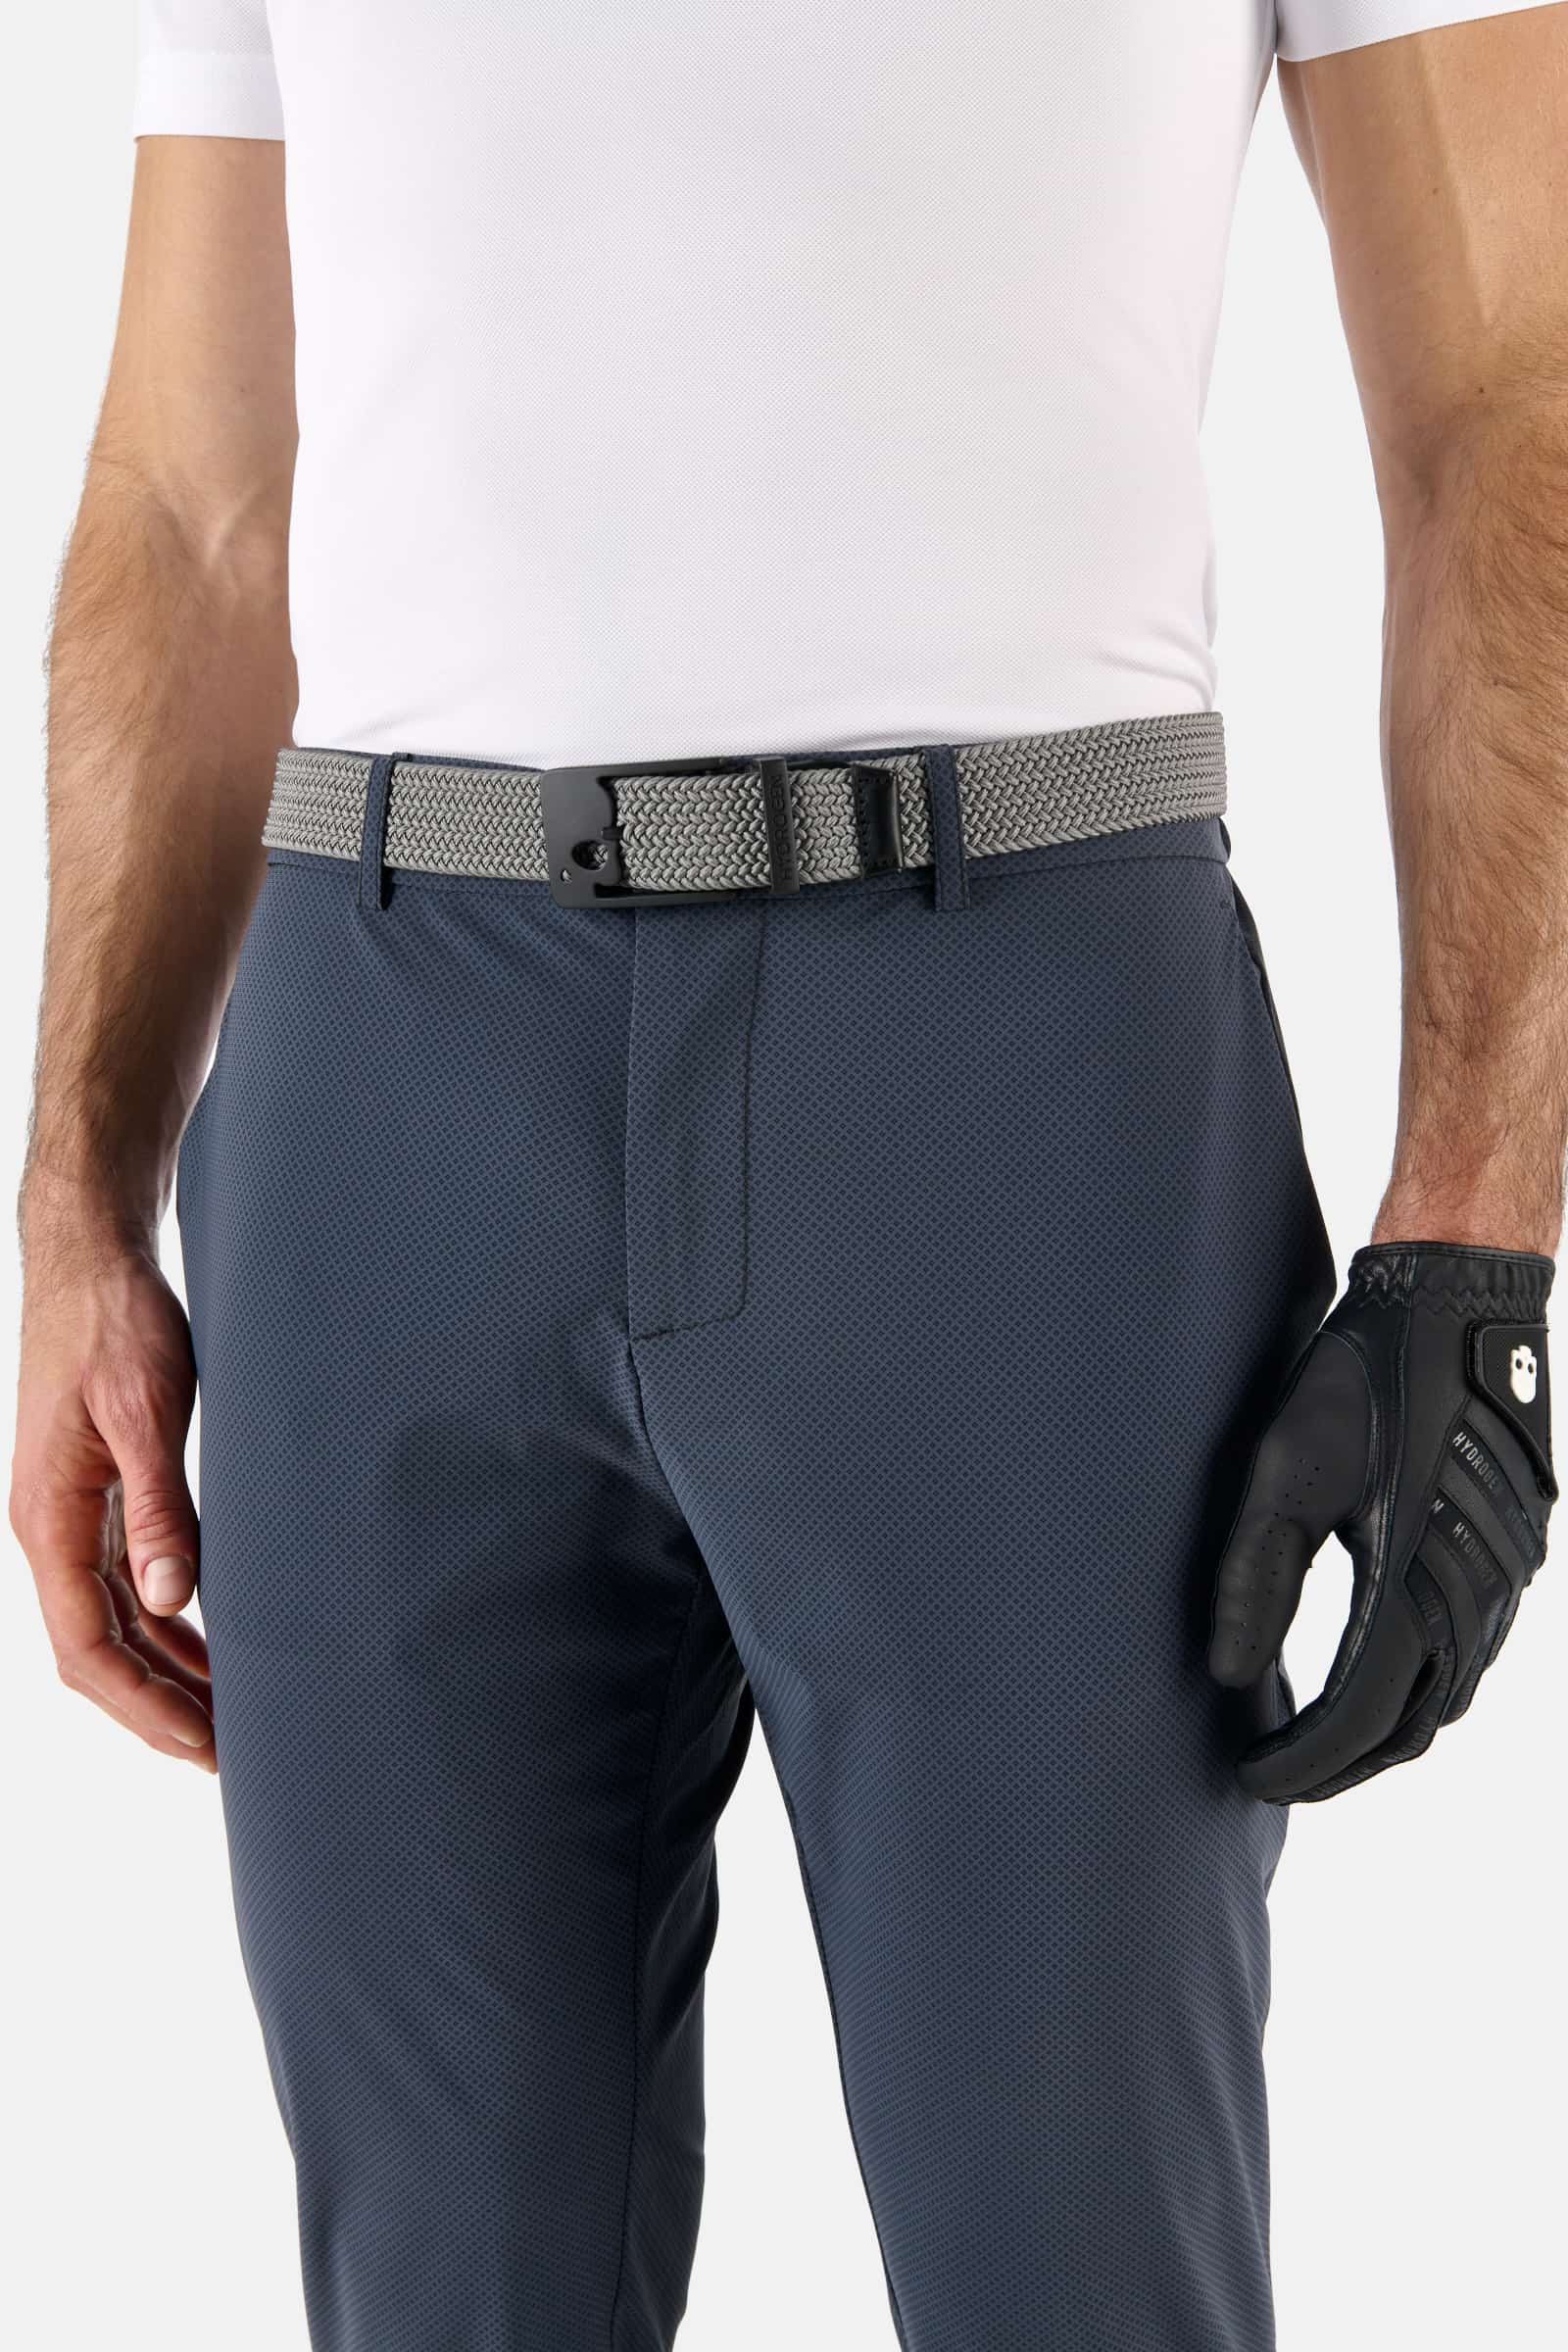 GOLF PANTS - ANTHRACITE - Hydrogen - Luxury Sportwear